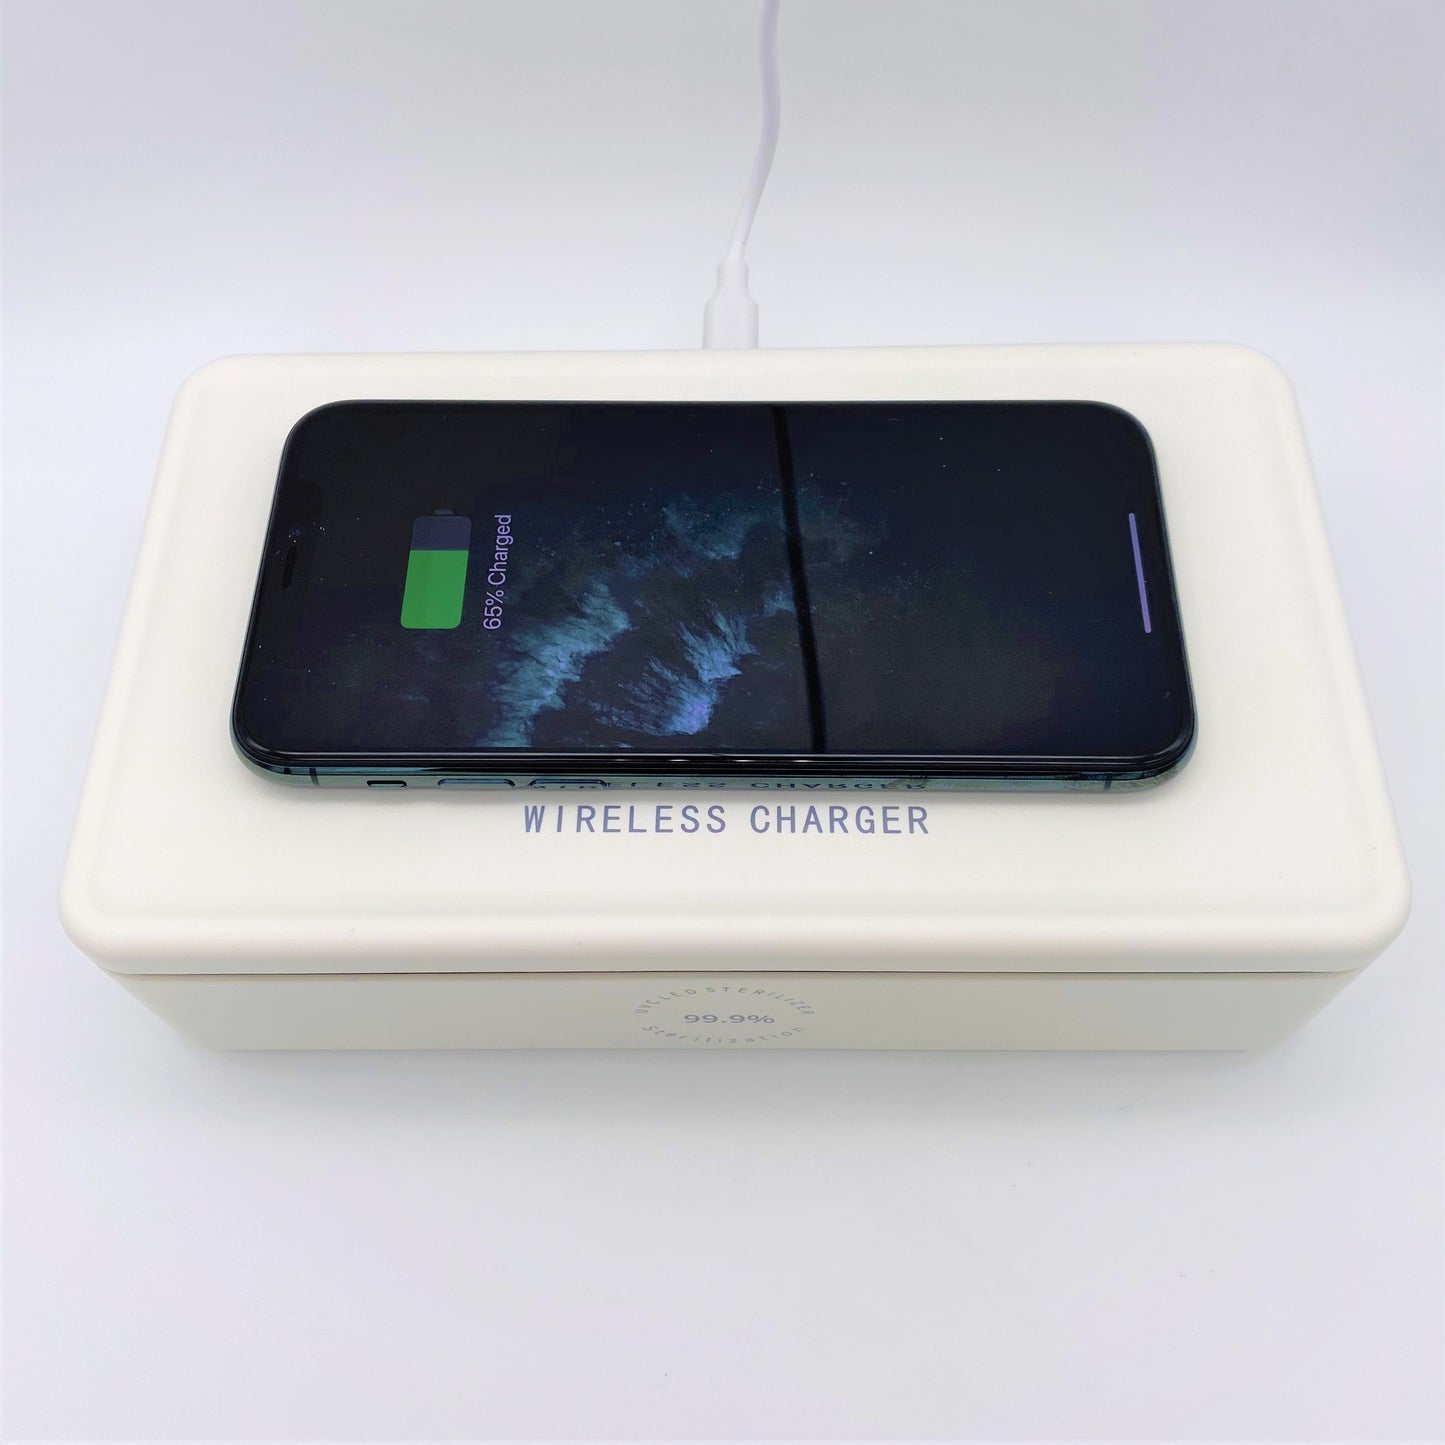 UV-C Sterilizer Box W/ Fast Wireless Charging